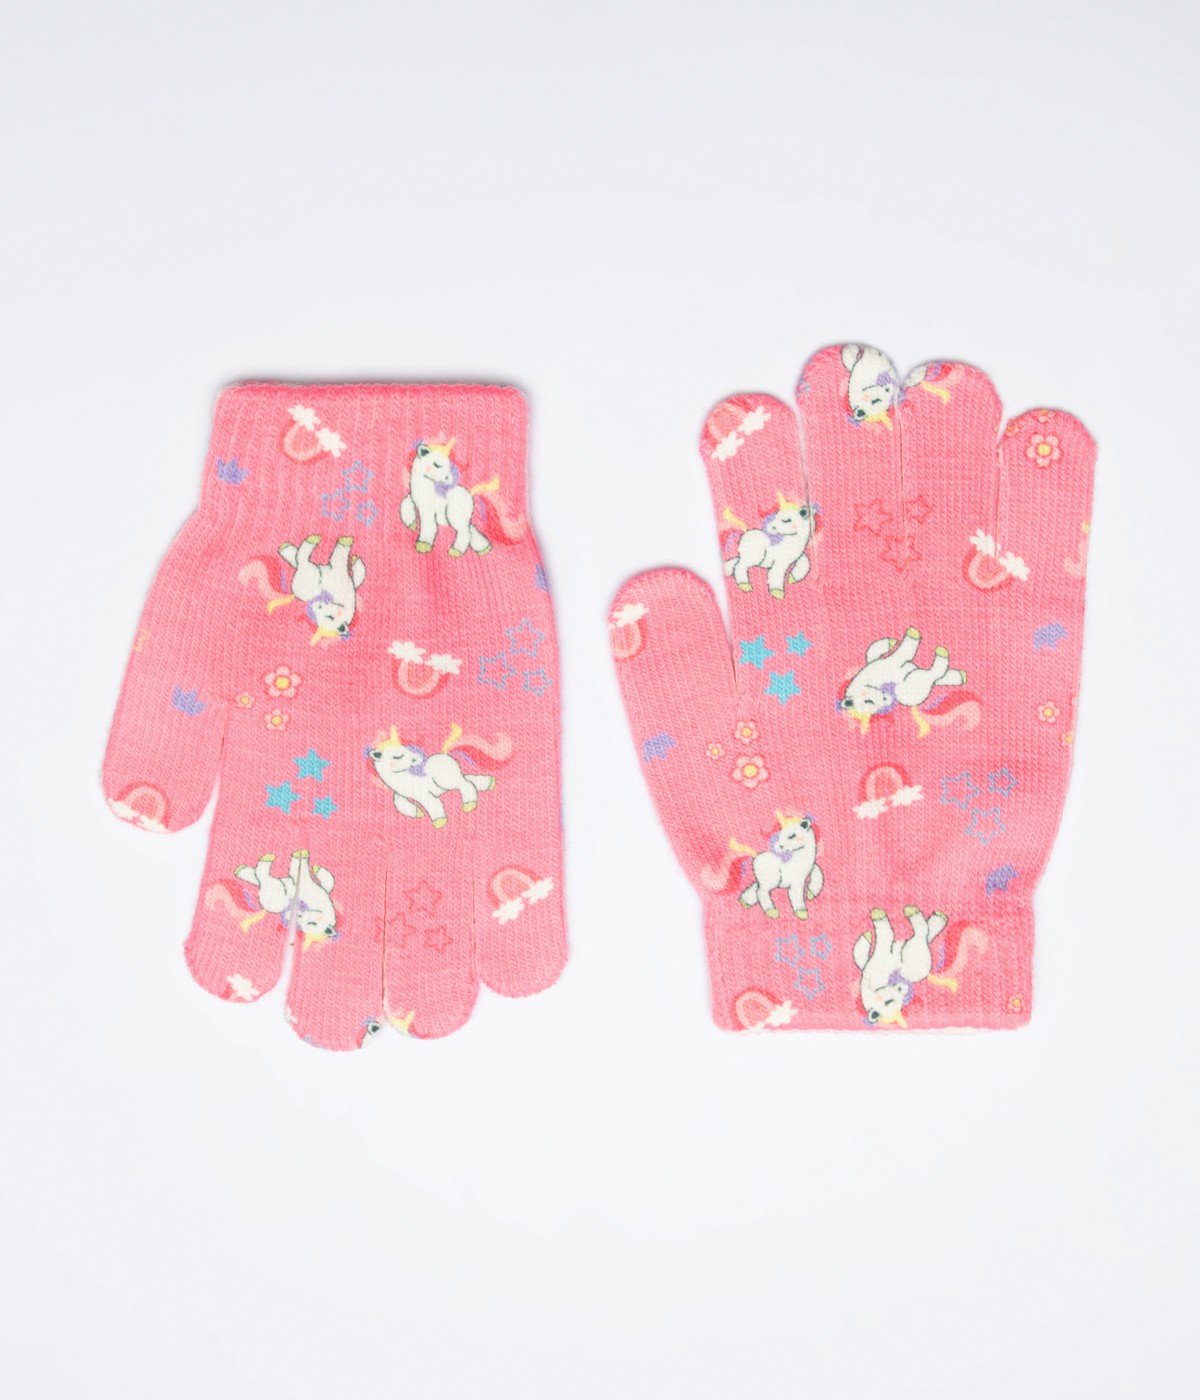 Mănuși Fetițe Unicorn